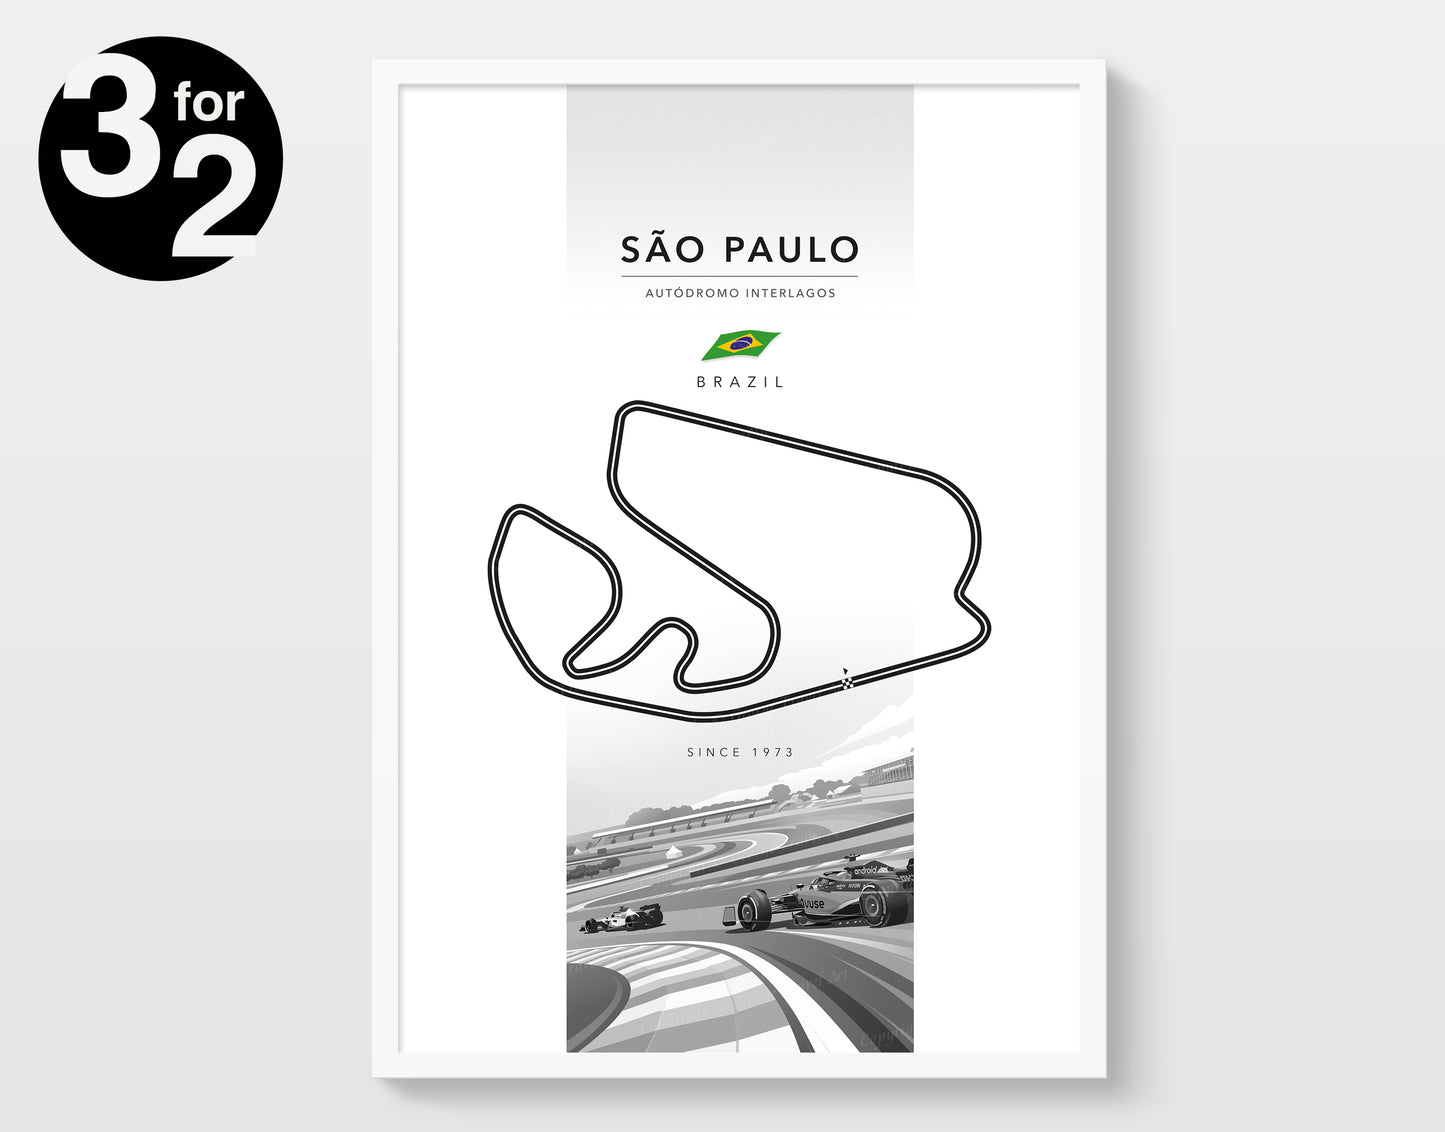 Sao Paulo F1 Circuit Poster / Interlagos F1 Racing Track/ Autódromo José Carlos Print